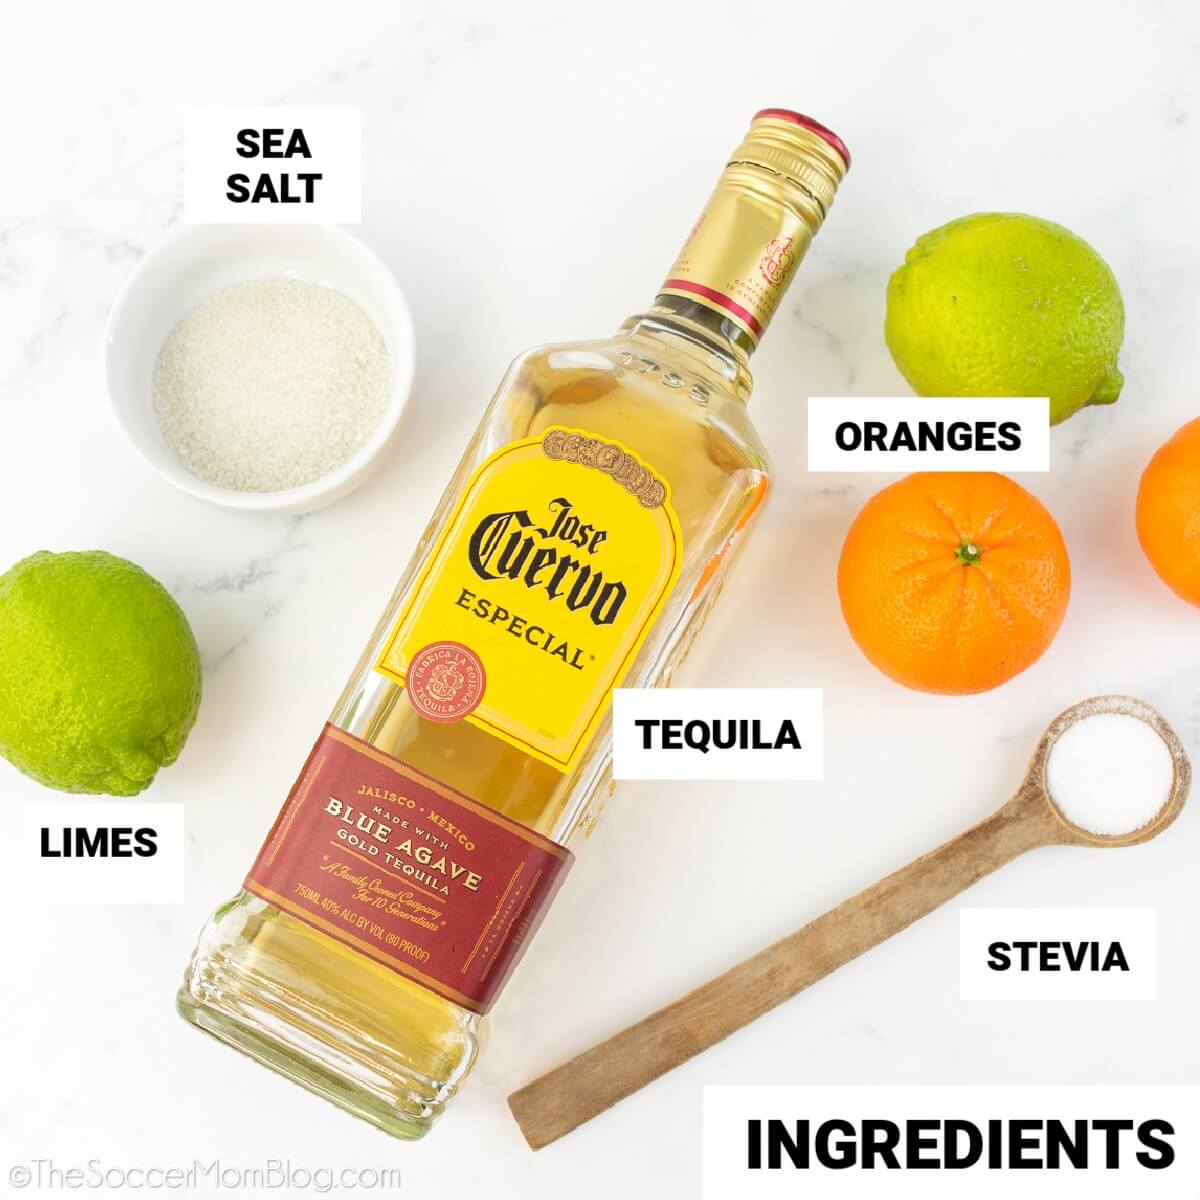 skinny margarita ingredients, with text labels: tequila, lime, oranges, salt, stevia.